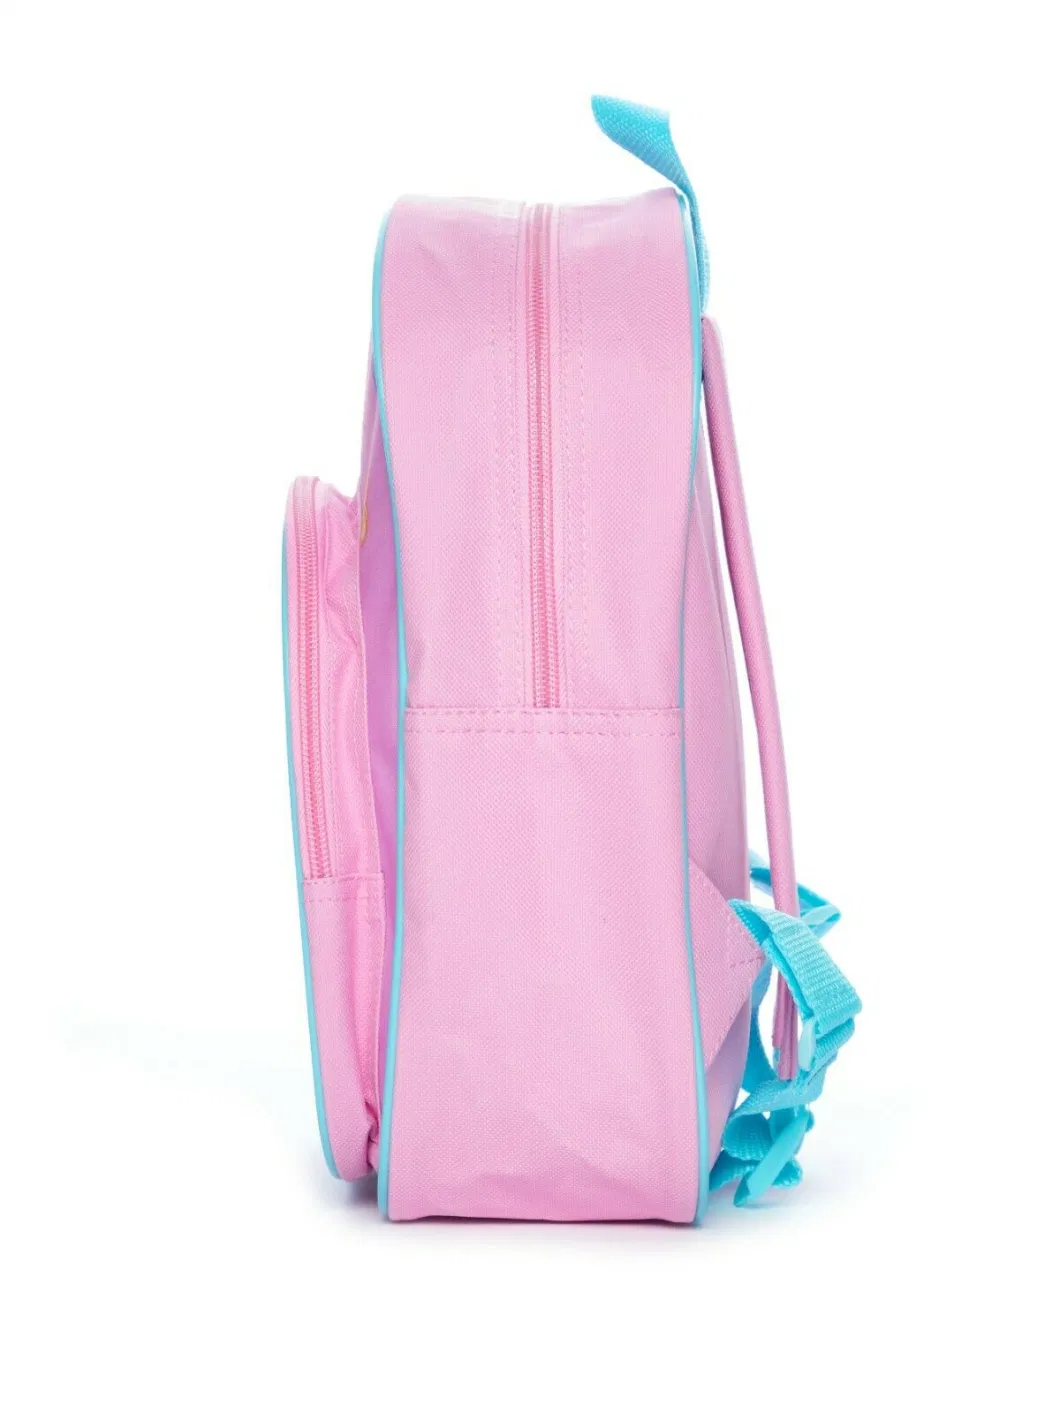 Cheap Kids Junior Kindergarten School Book Bags Backpack -Toddler Backpack Girls for School Nursery